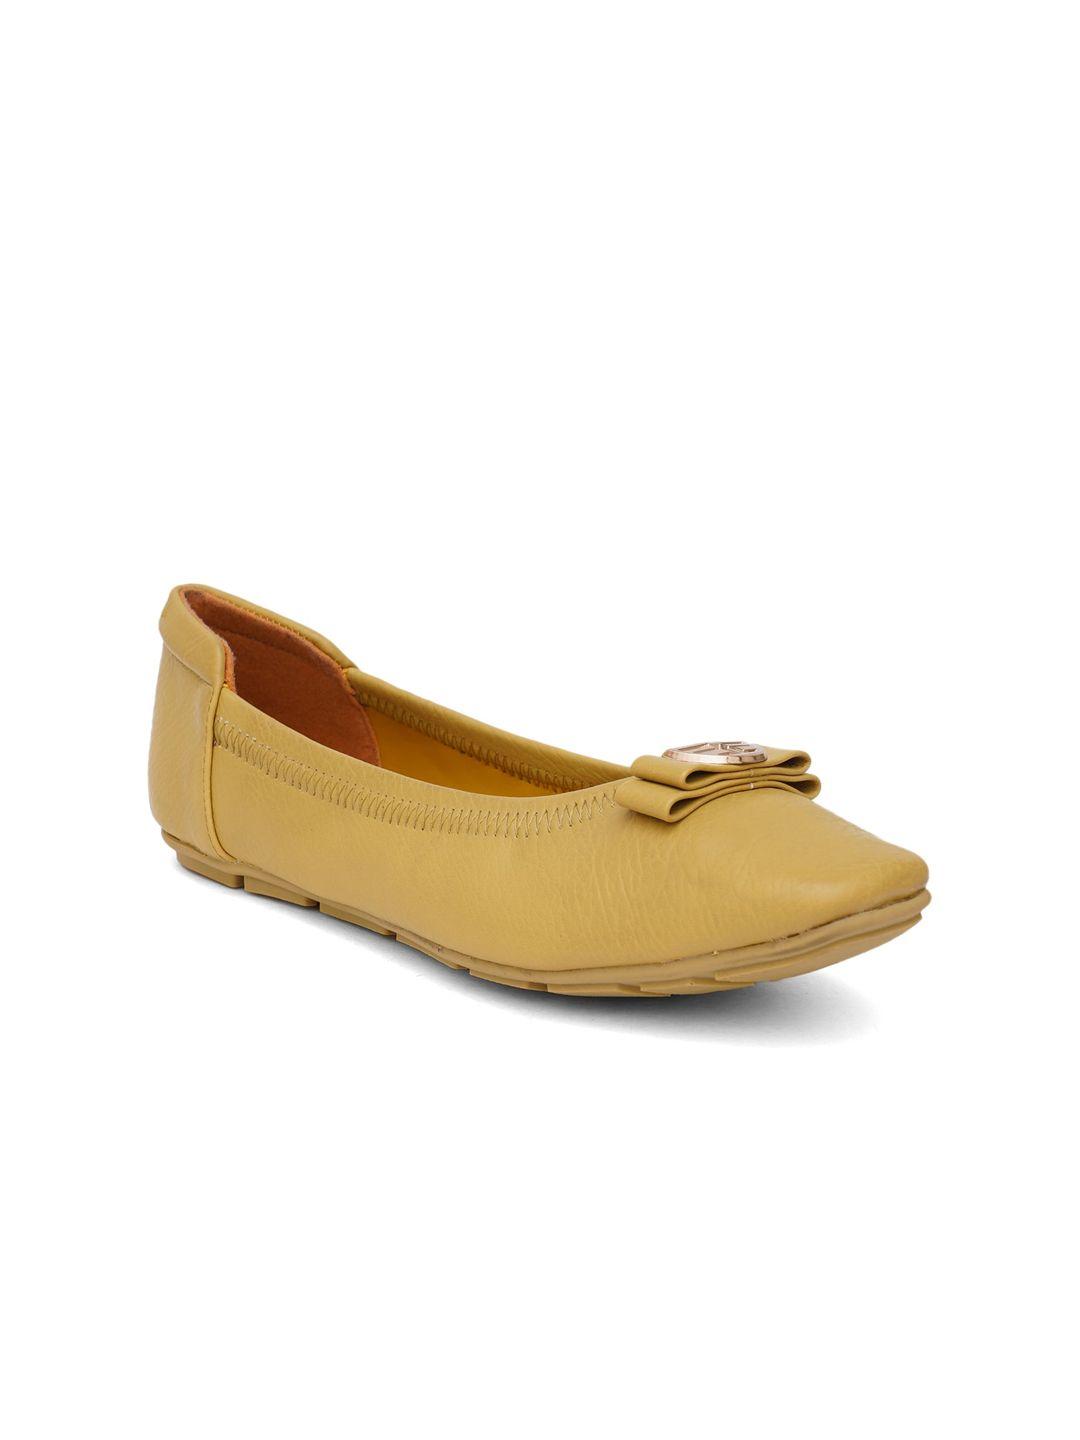 sherrif shoes women yellow open toe flats with bows